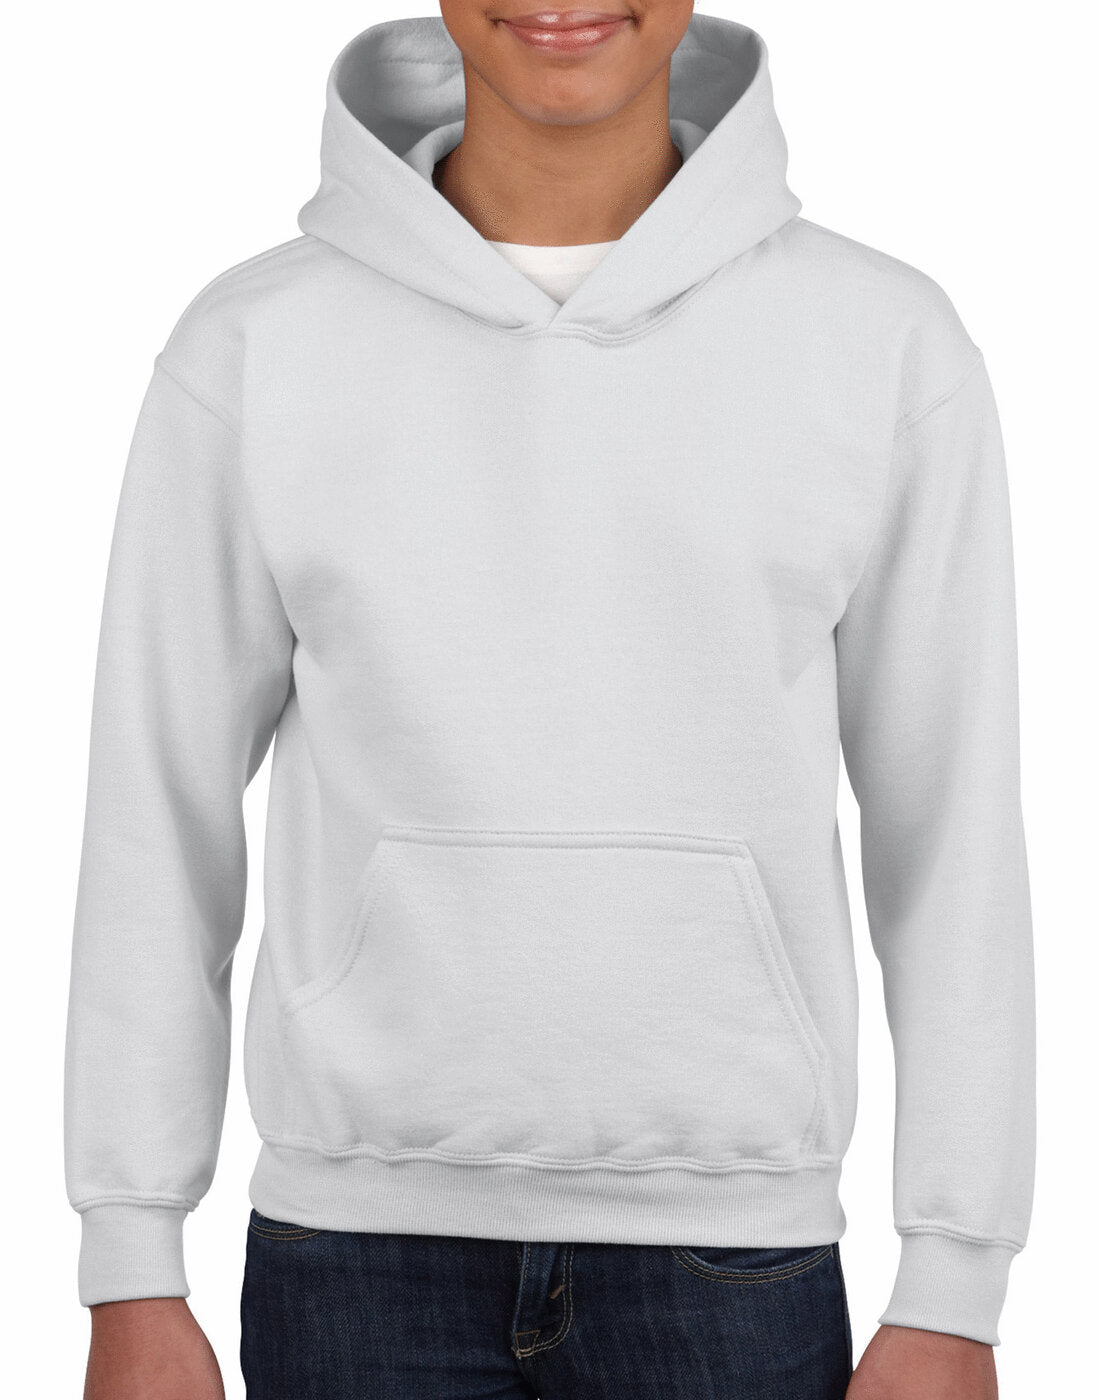 Gildan Kids Heavy Blend Hooded Sweatshirt - White